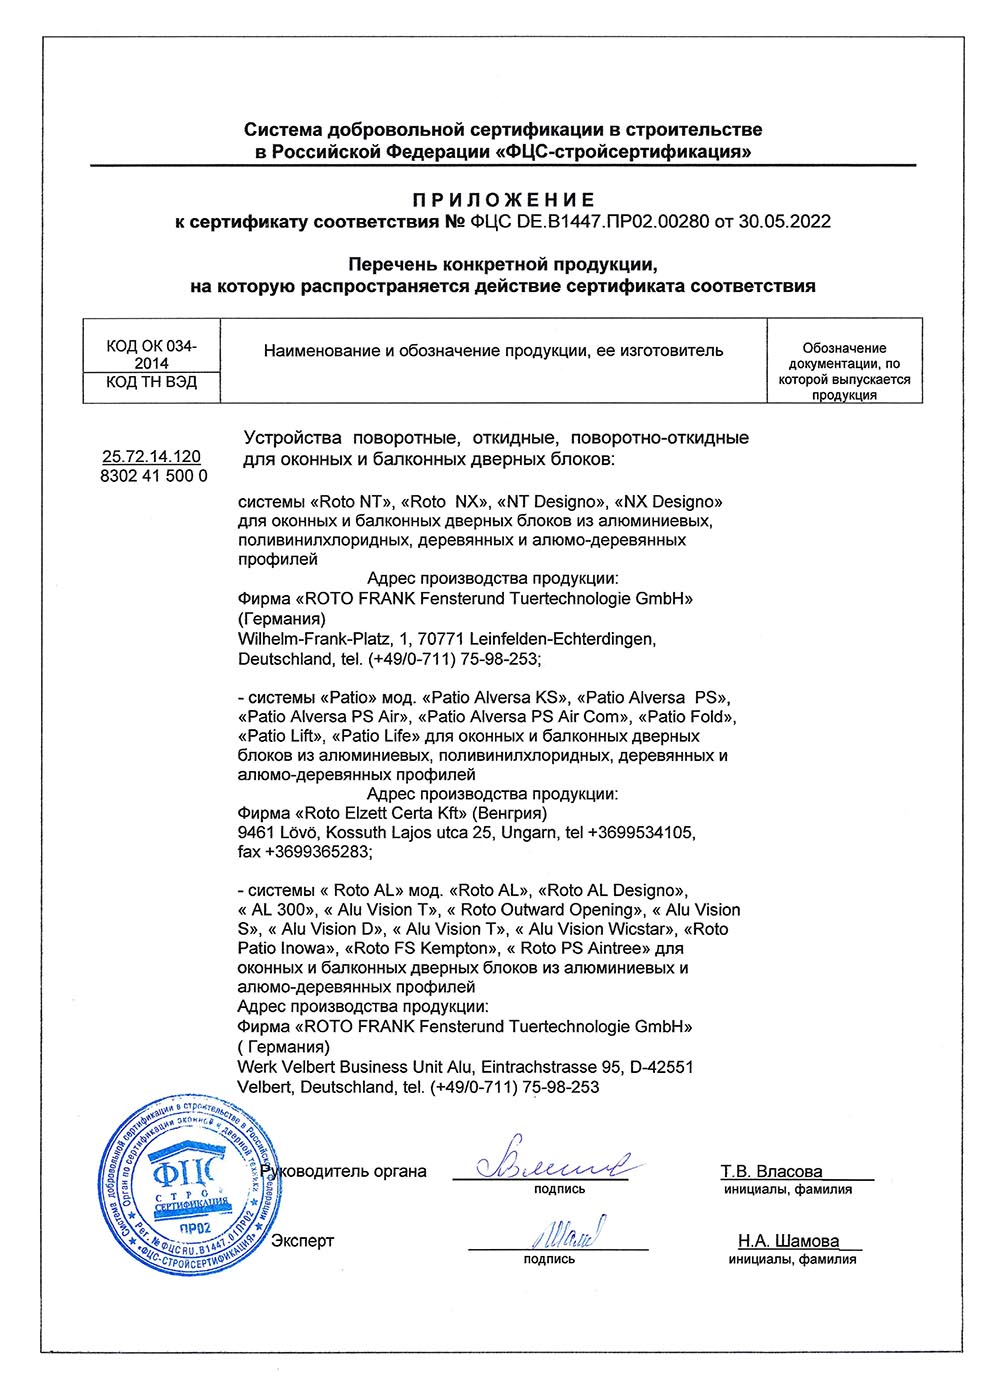 Roto NT, Roto NX, Patio, Roto Al, приложение к сертификату соответствия, 29.05.2024